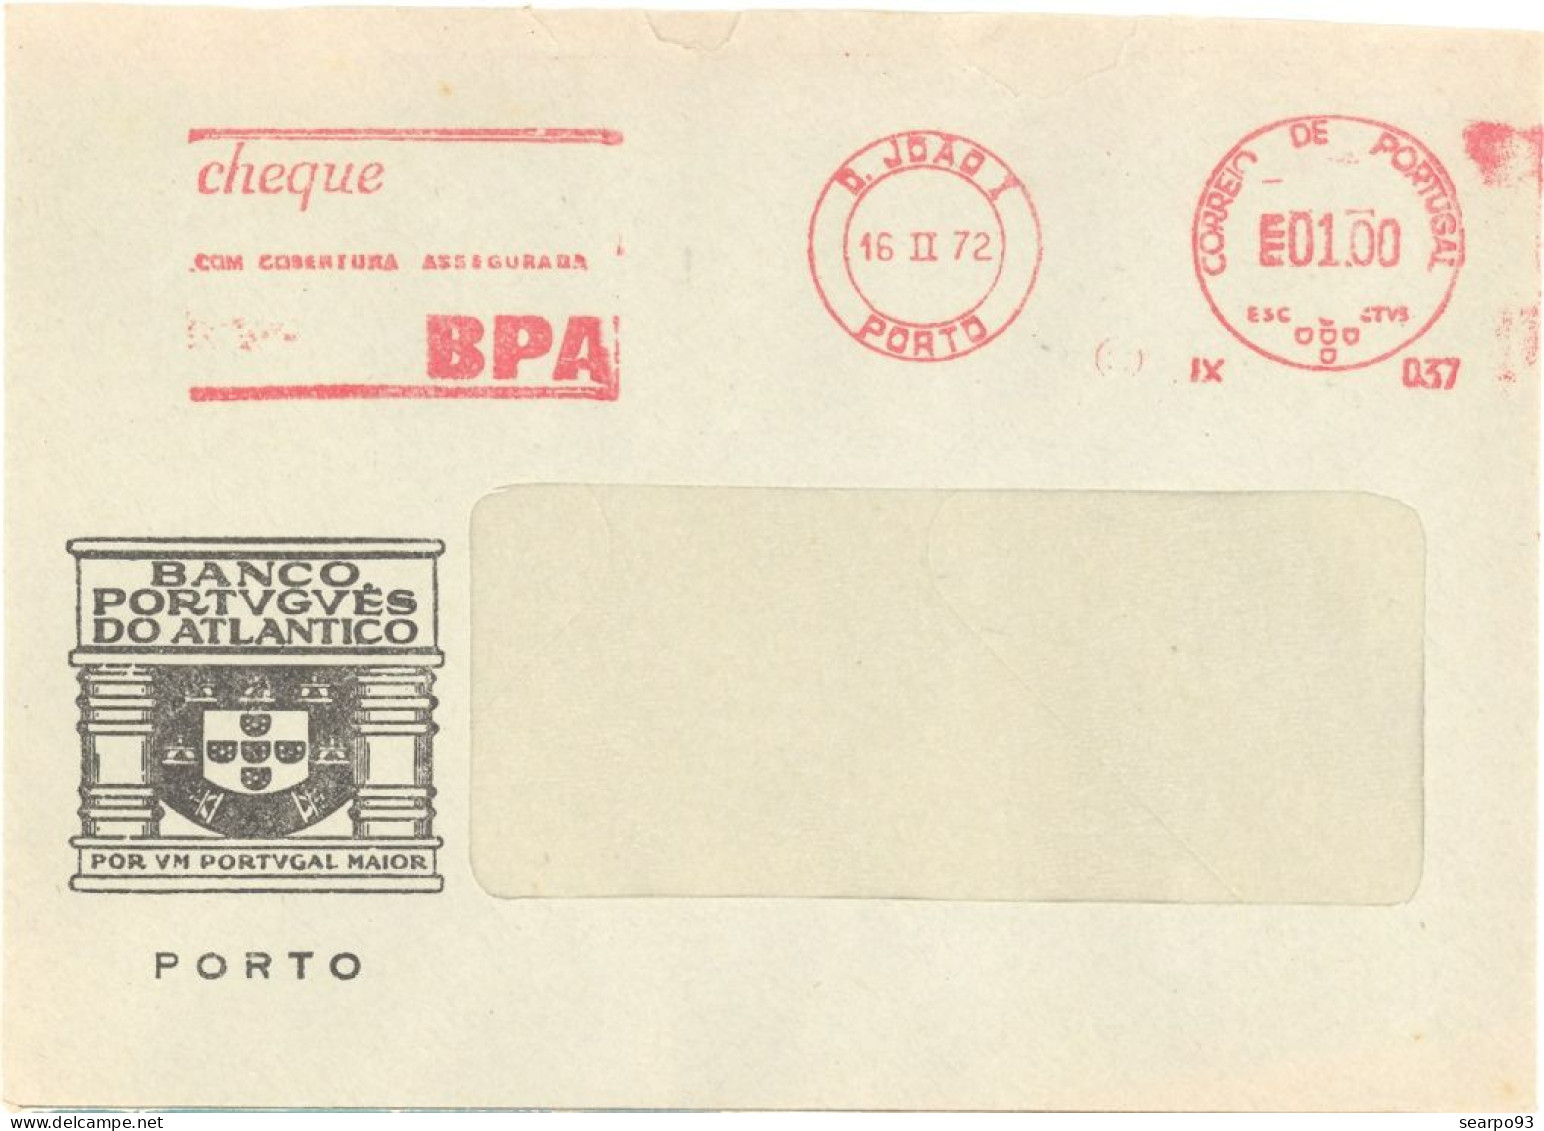 PORTUGAL. METER SLOGAN. BANCO PORTUGUES DO ATLANTICO. BNP. BANK. PORTO. 1972 - Postmark Collection